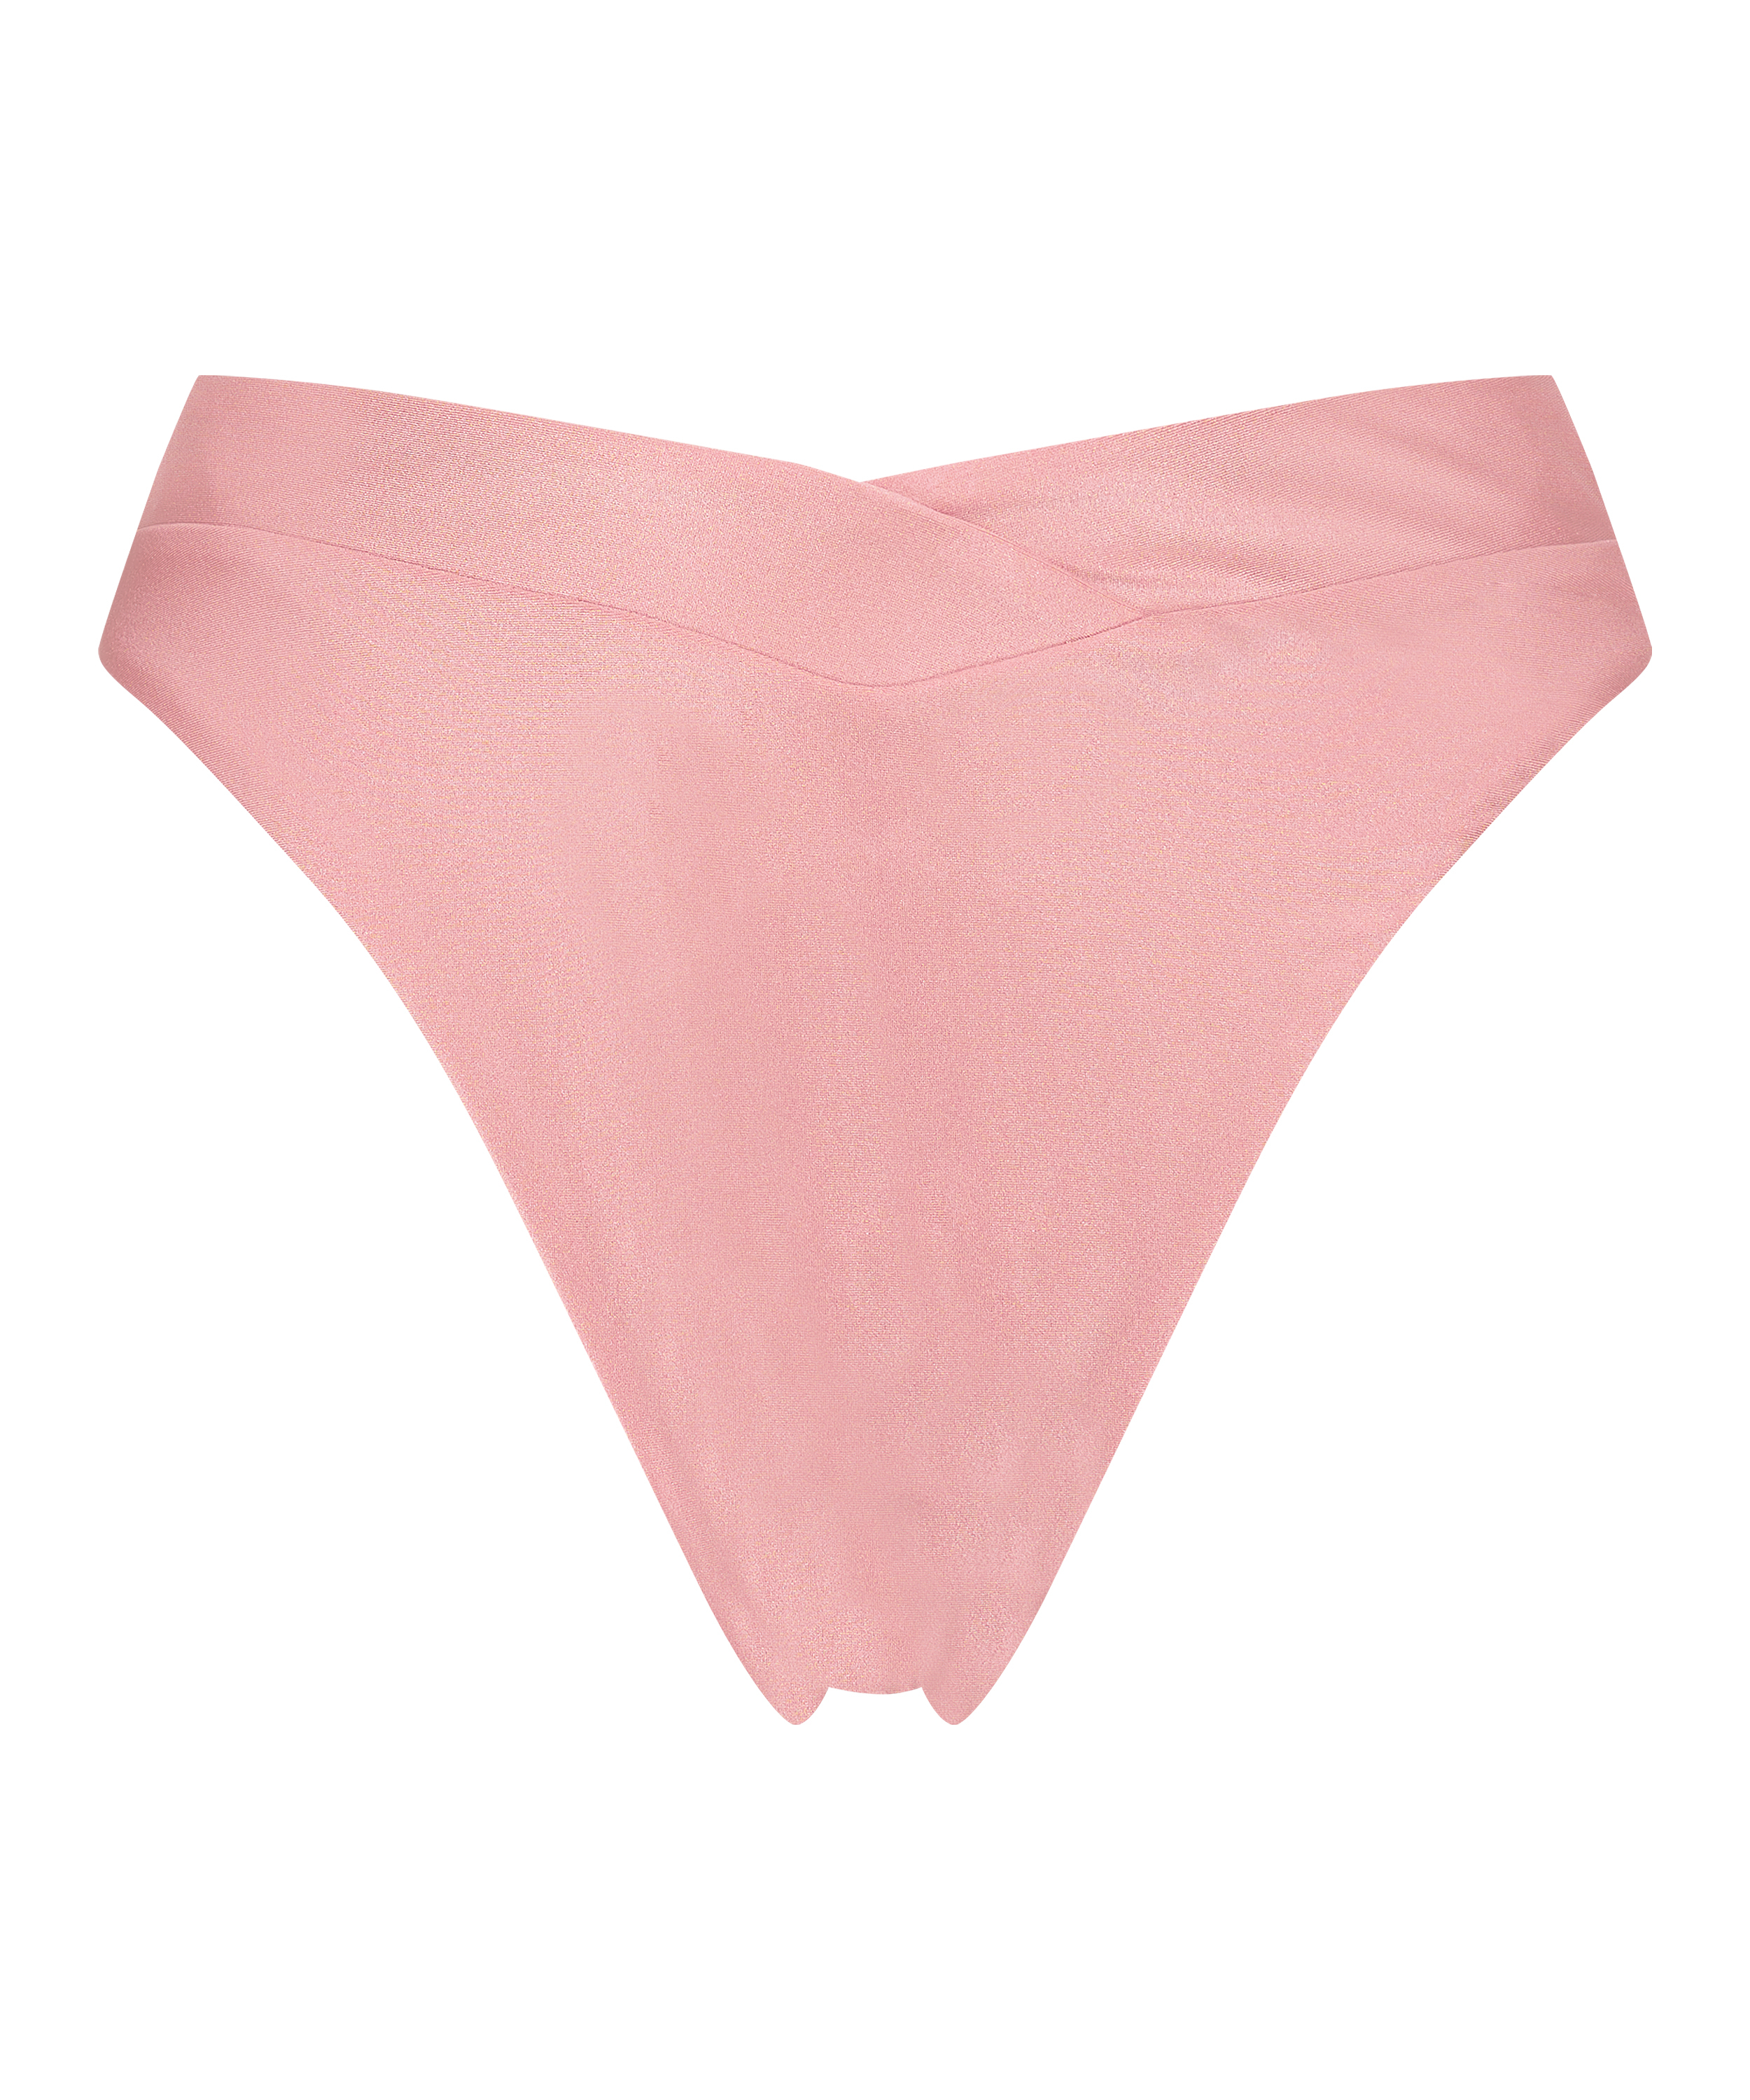 Lais high-leg bikini bottoms, Pink, main